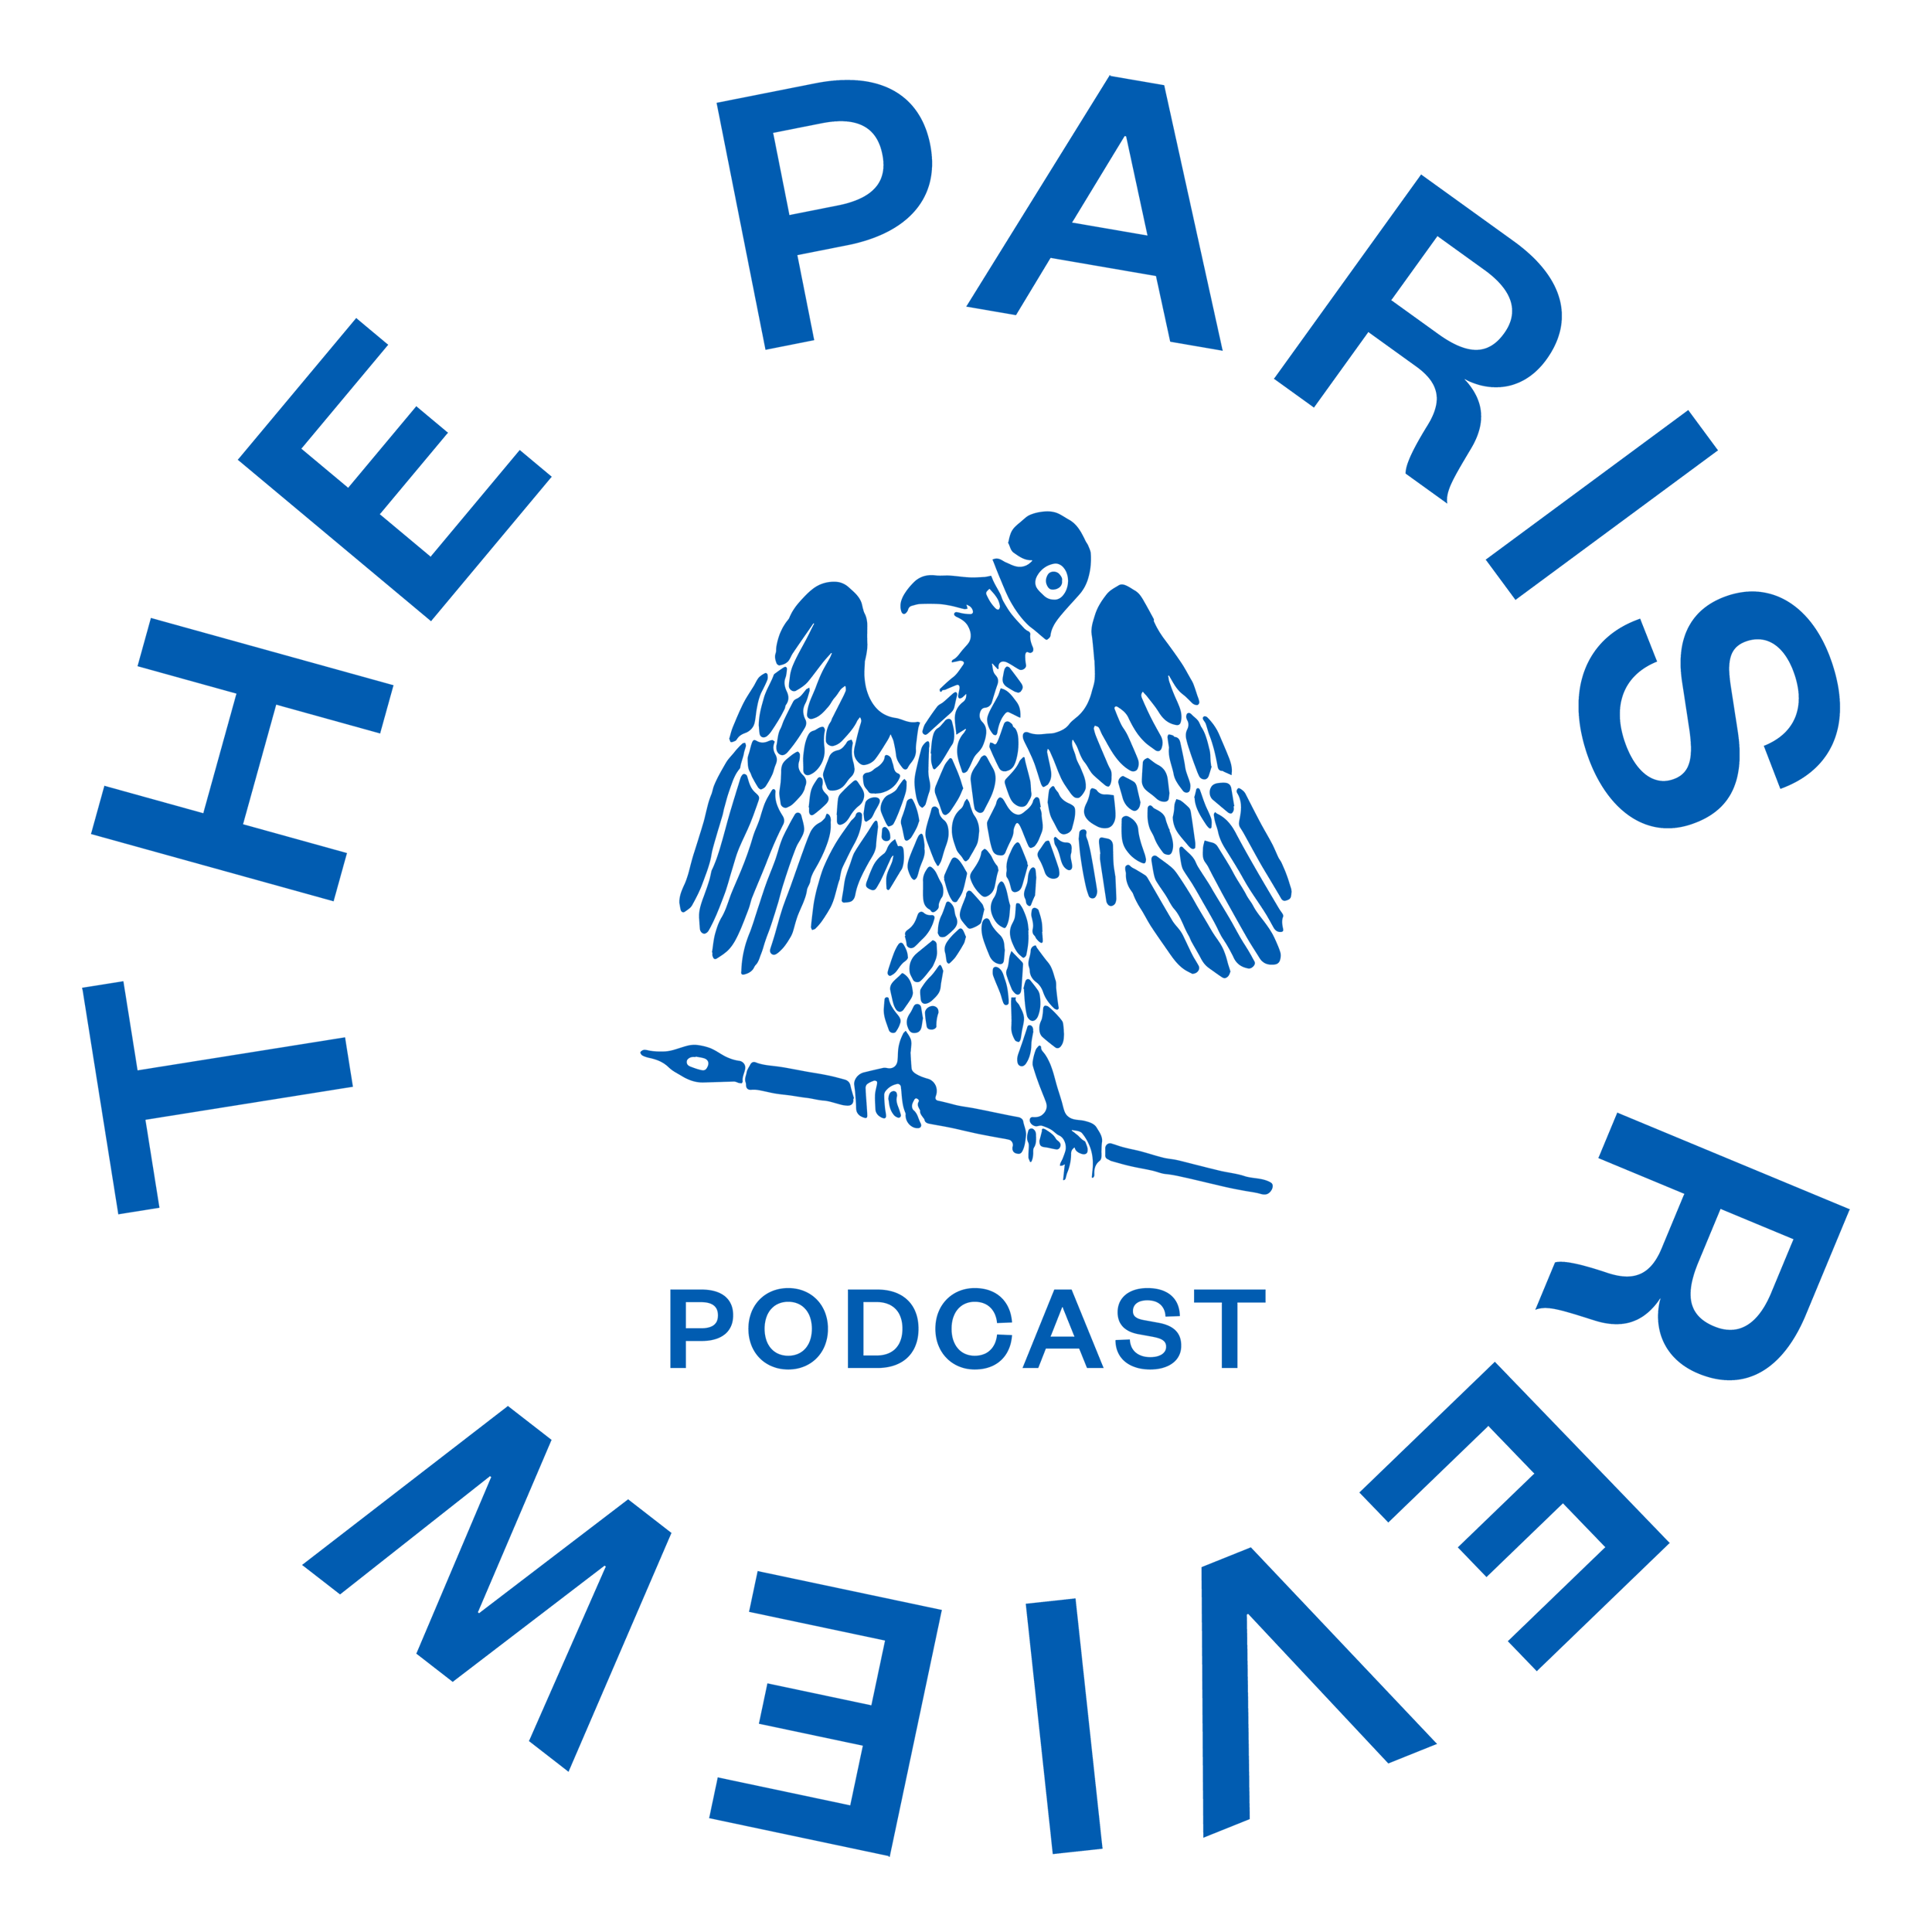 The Paris Review Podcast